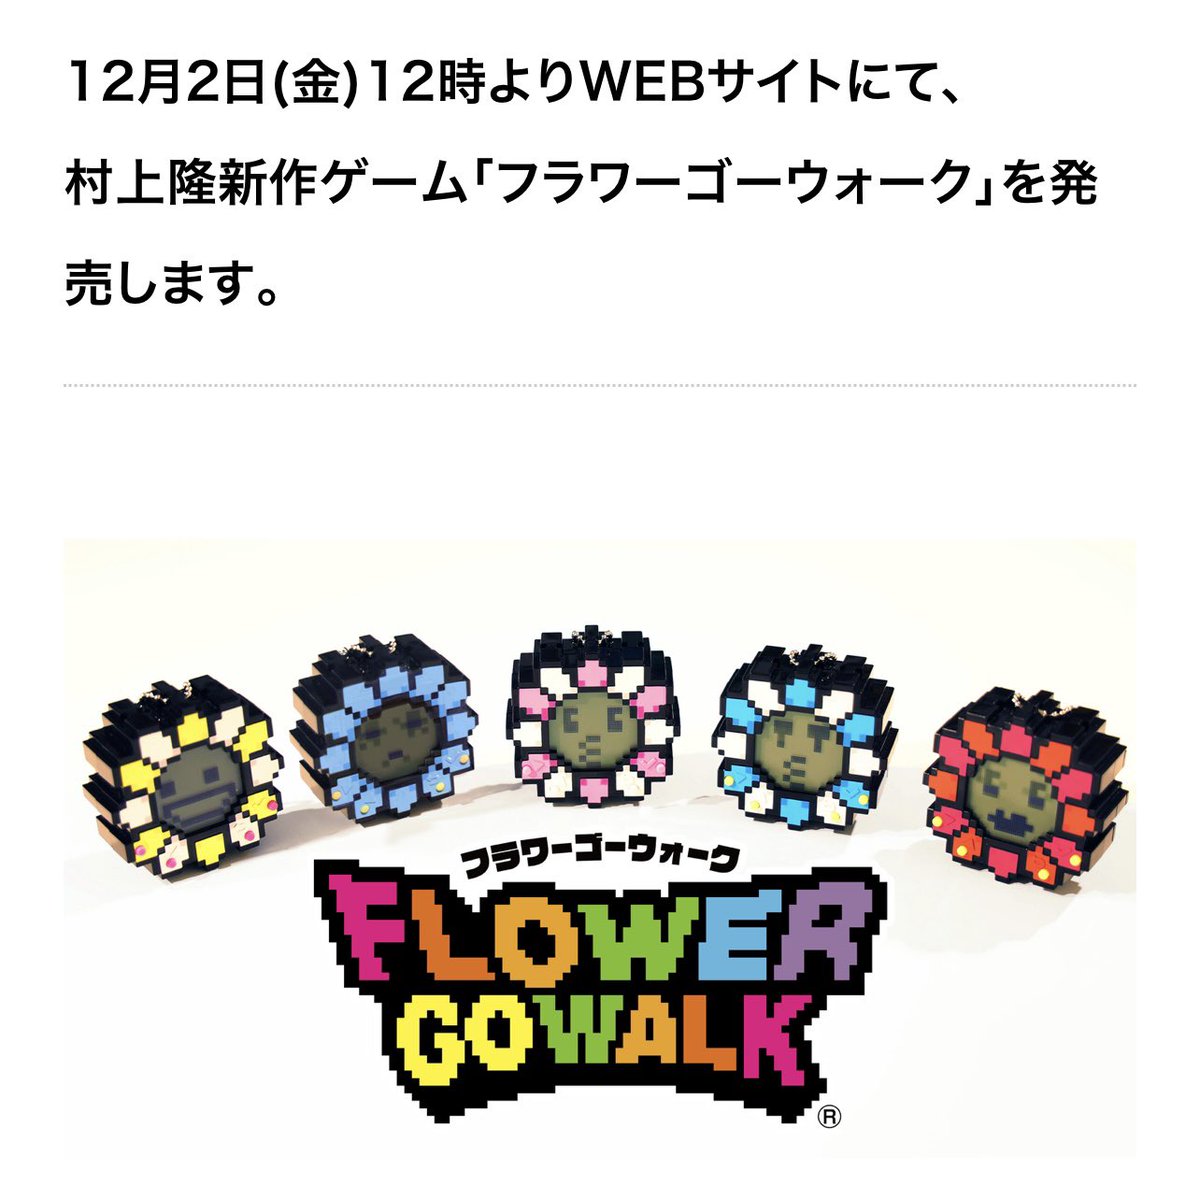 Flower go walk 村上隆 NFTホルダー限定 - alacantitv.com